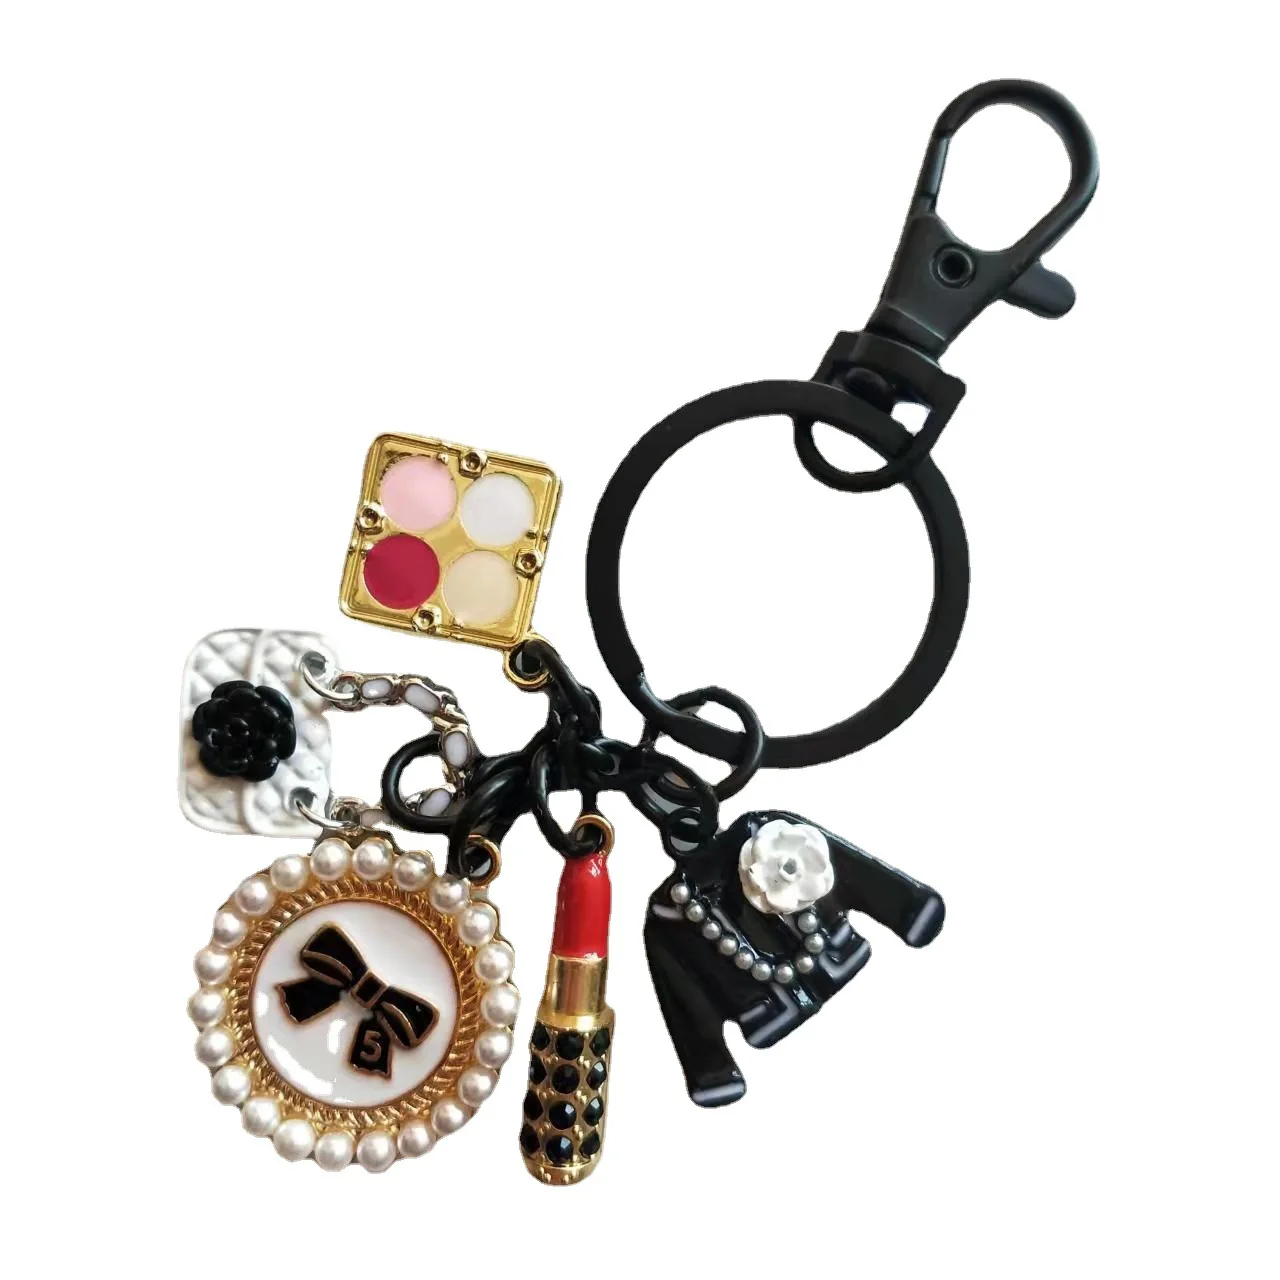 asleepingsheep Camellia Flowers Bag Charm Keychain Key Ring Car Charm Black.White Handmade New